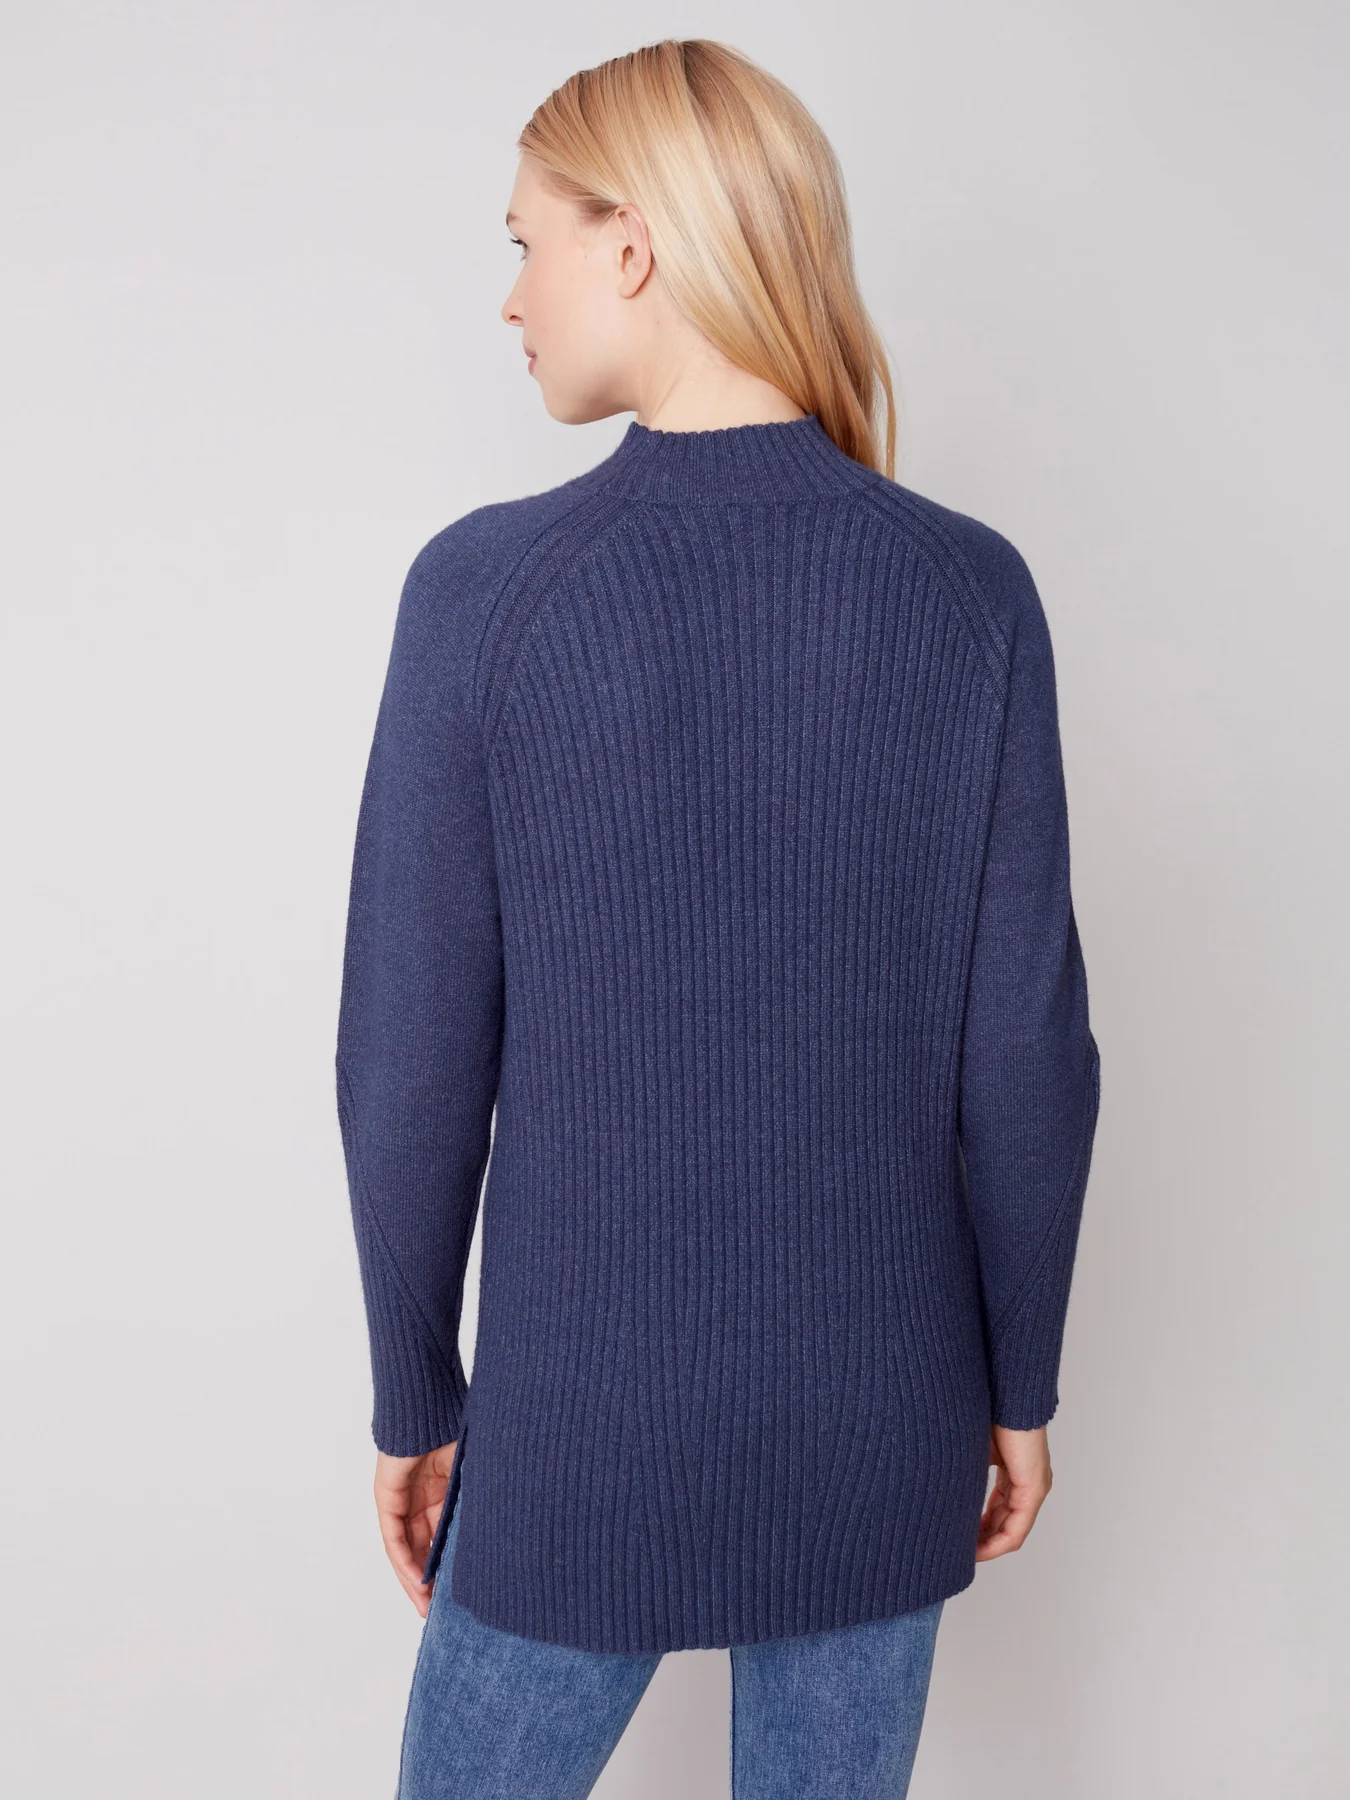 Charlie B - Mock Neck Tunic Sweater - Denim